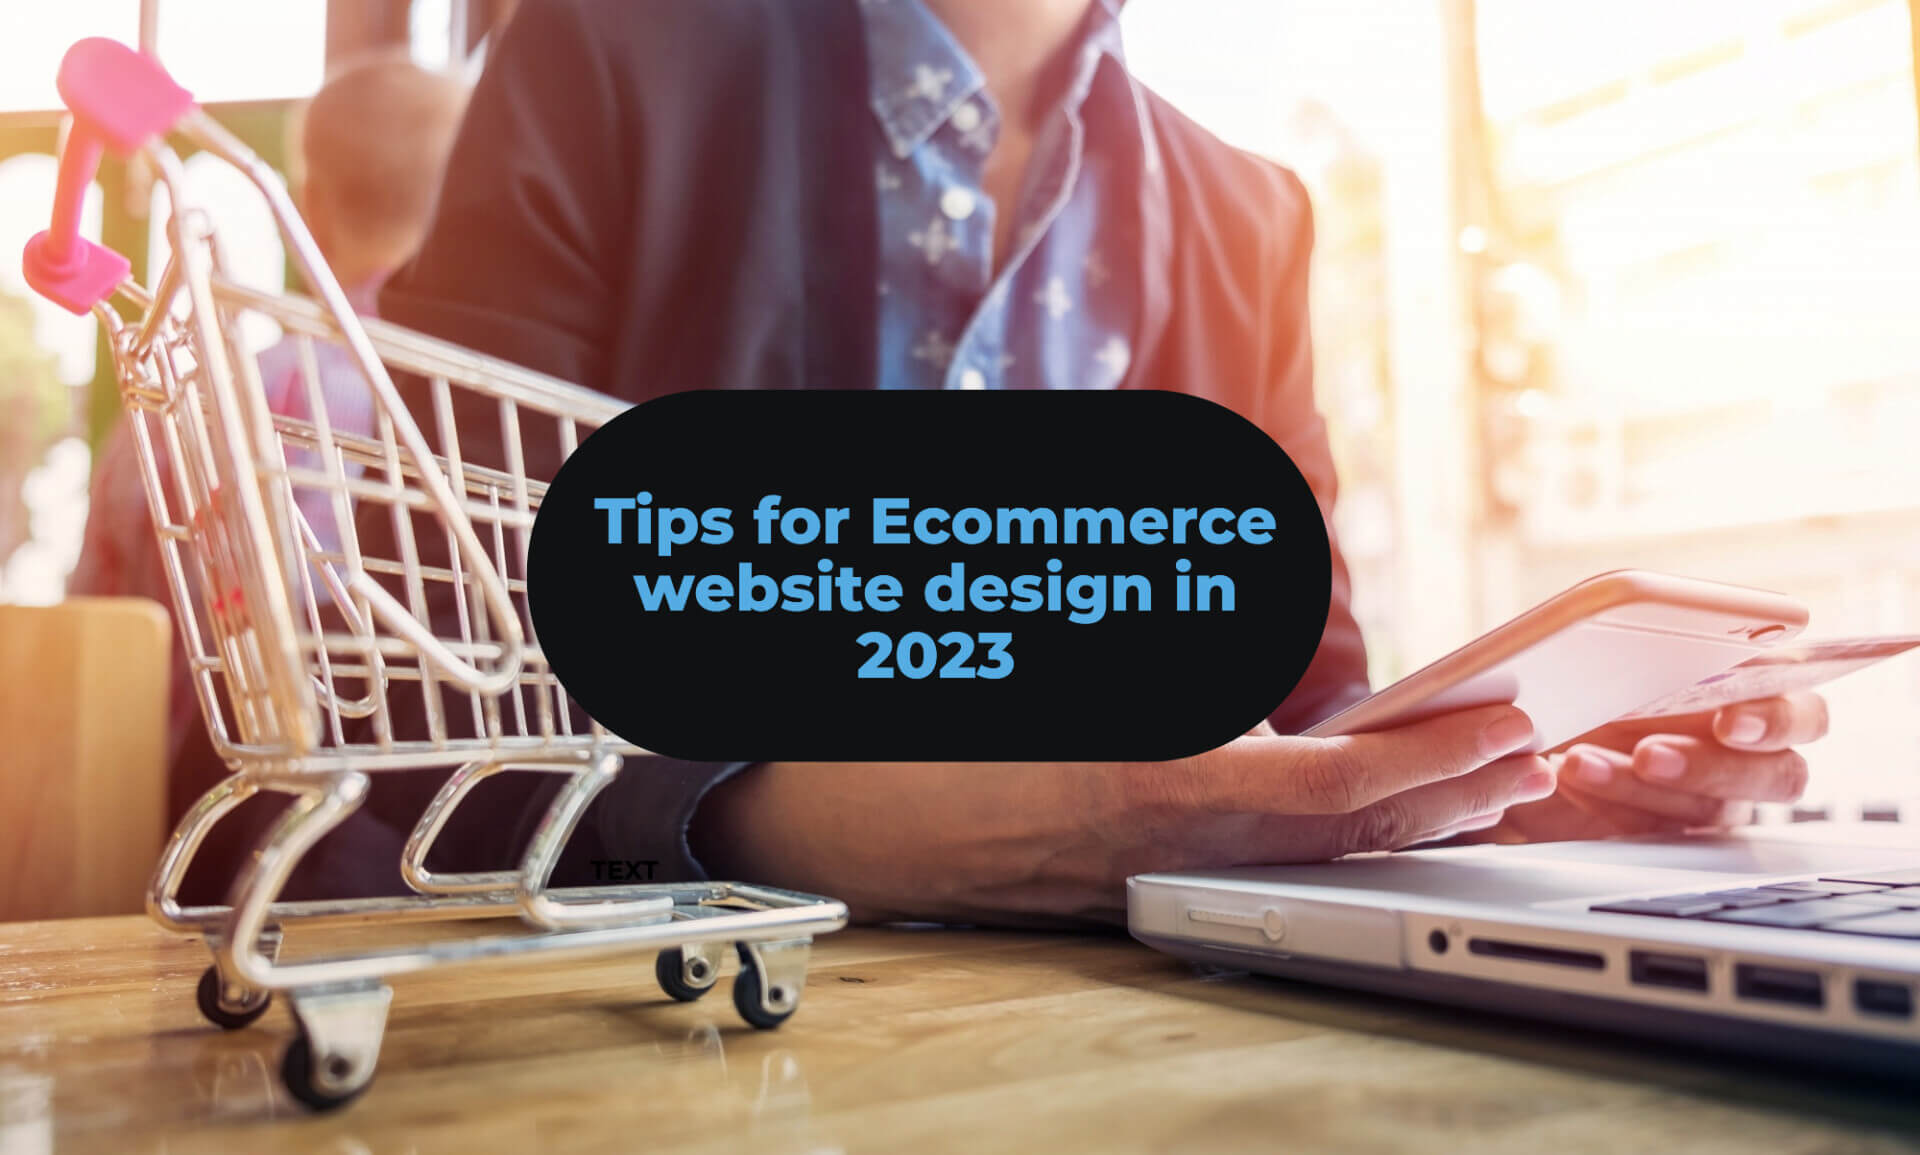 Tips for ecommerce website design in 2023